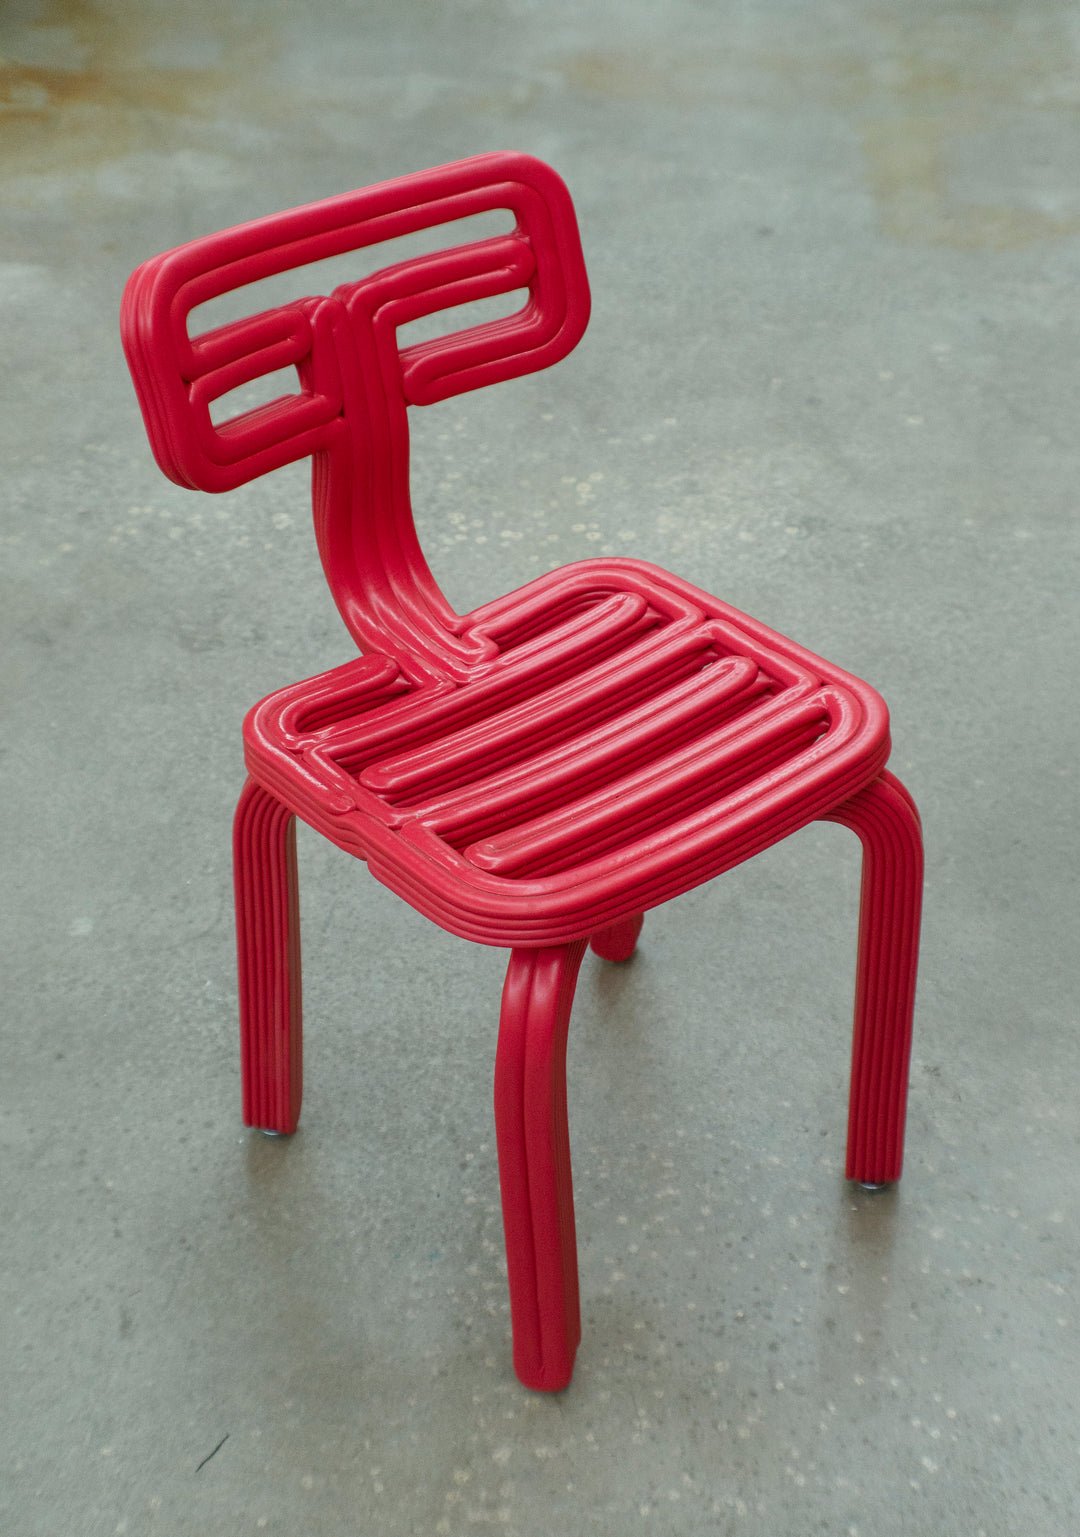 Dirk van der Kooij – Chubby Chair